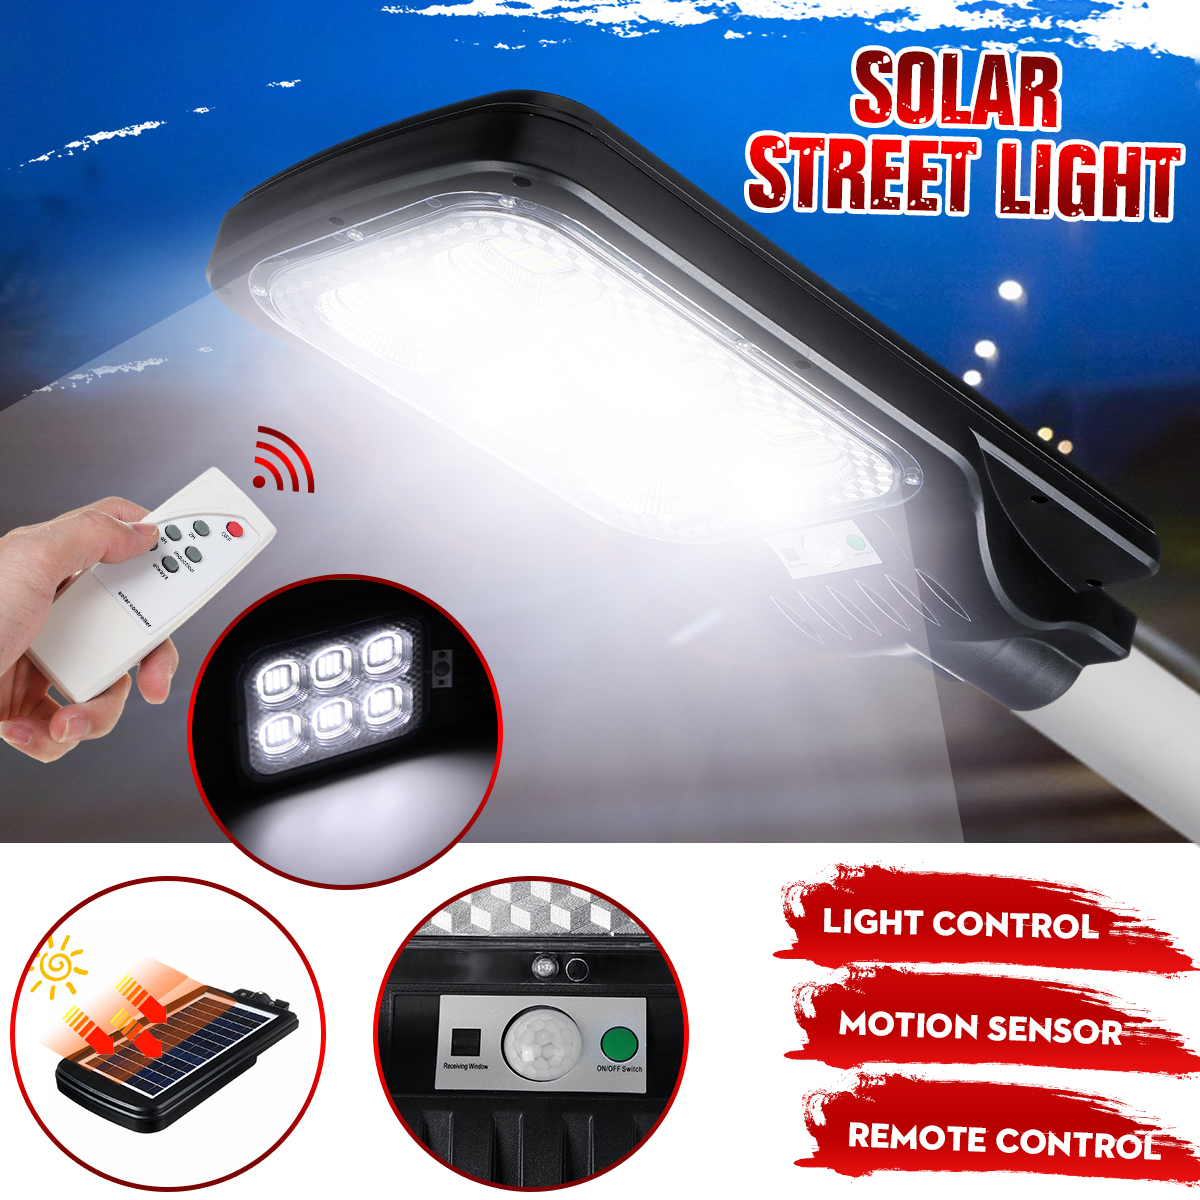 Solar-Street-Light-108LED-360W-Button-Control-Light-Control-Timing-Control-Remote-Control-PIR-Motion-1638819-4